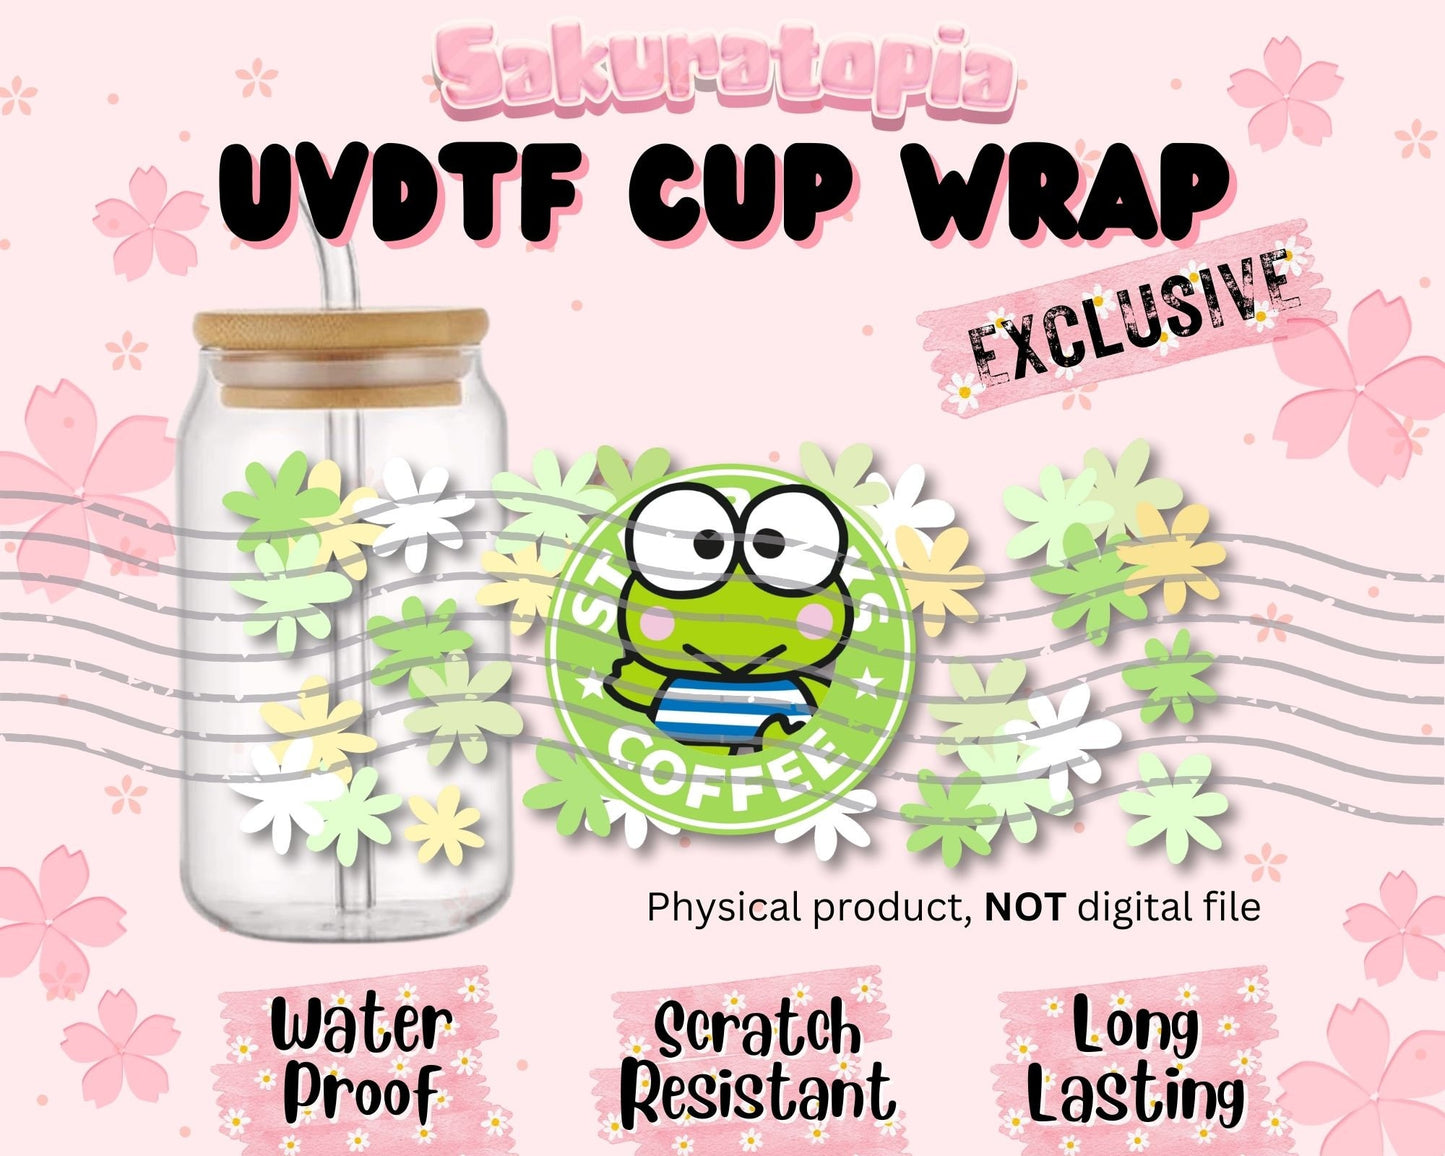 UVDTF Sanrio Anime Cup Wrap, Ready to Use Glass Cup Wrap for Glass Can | Ready to Apply UVDTF, UVDTF Transfers